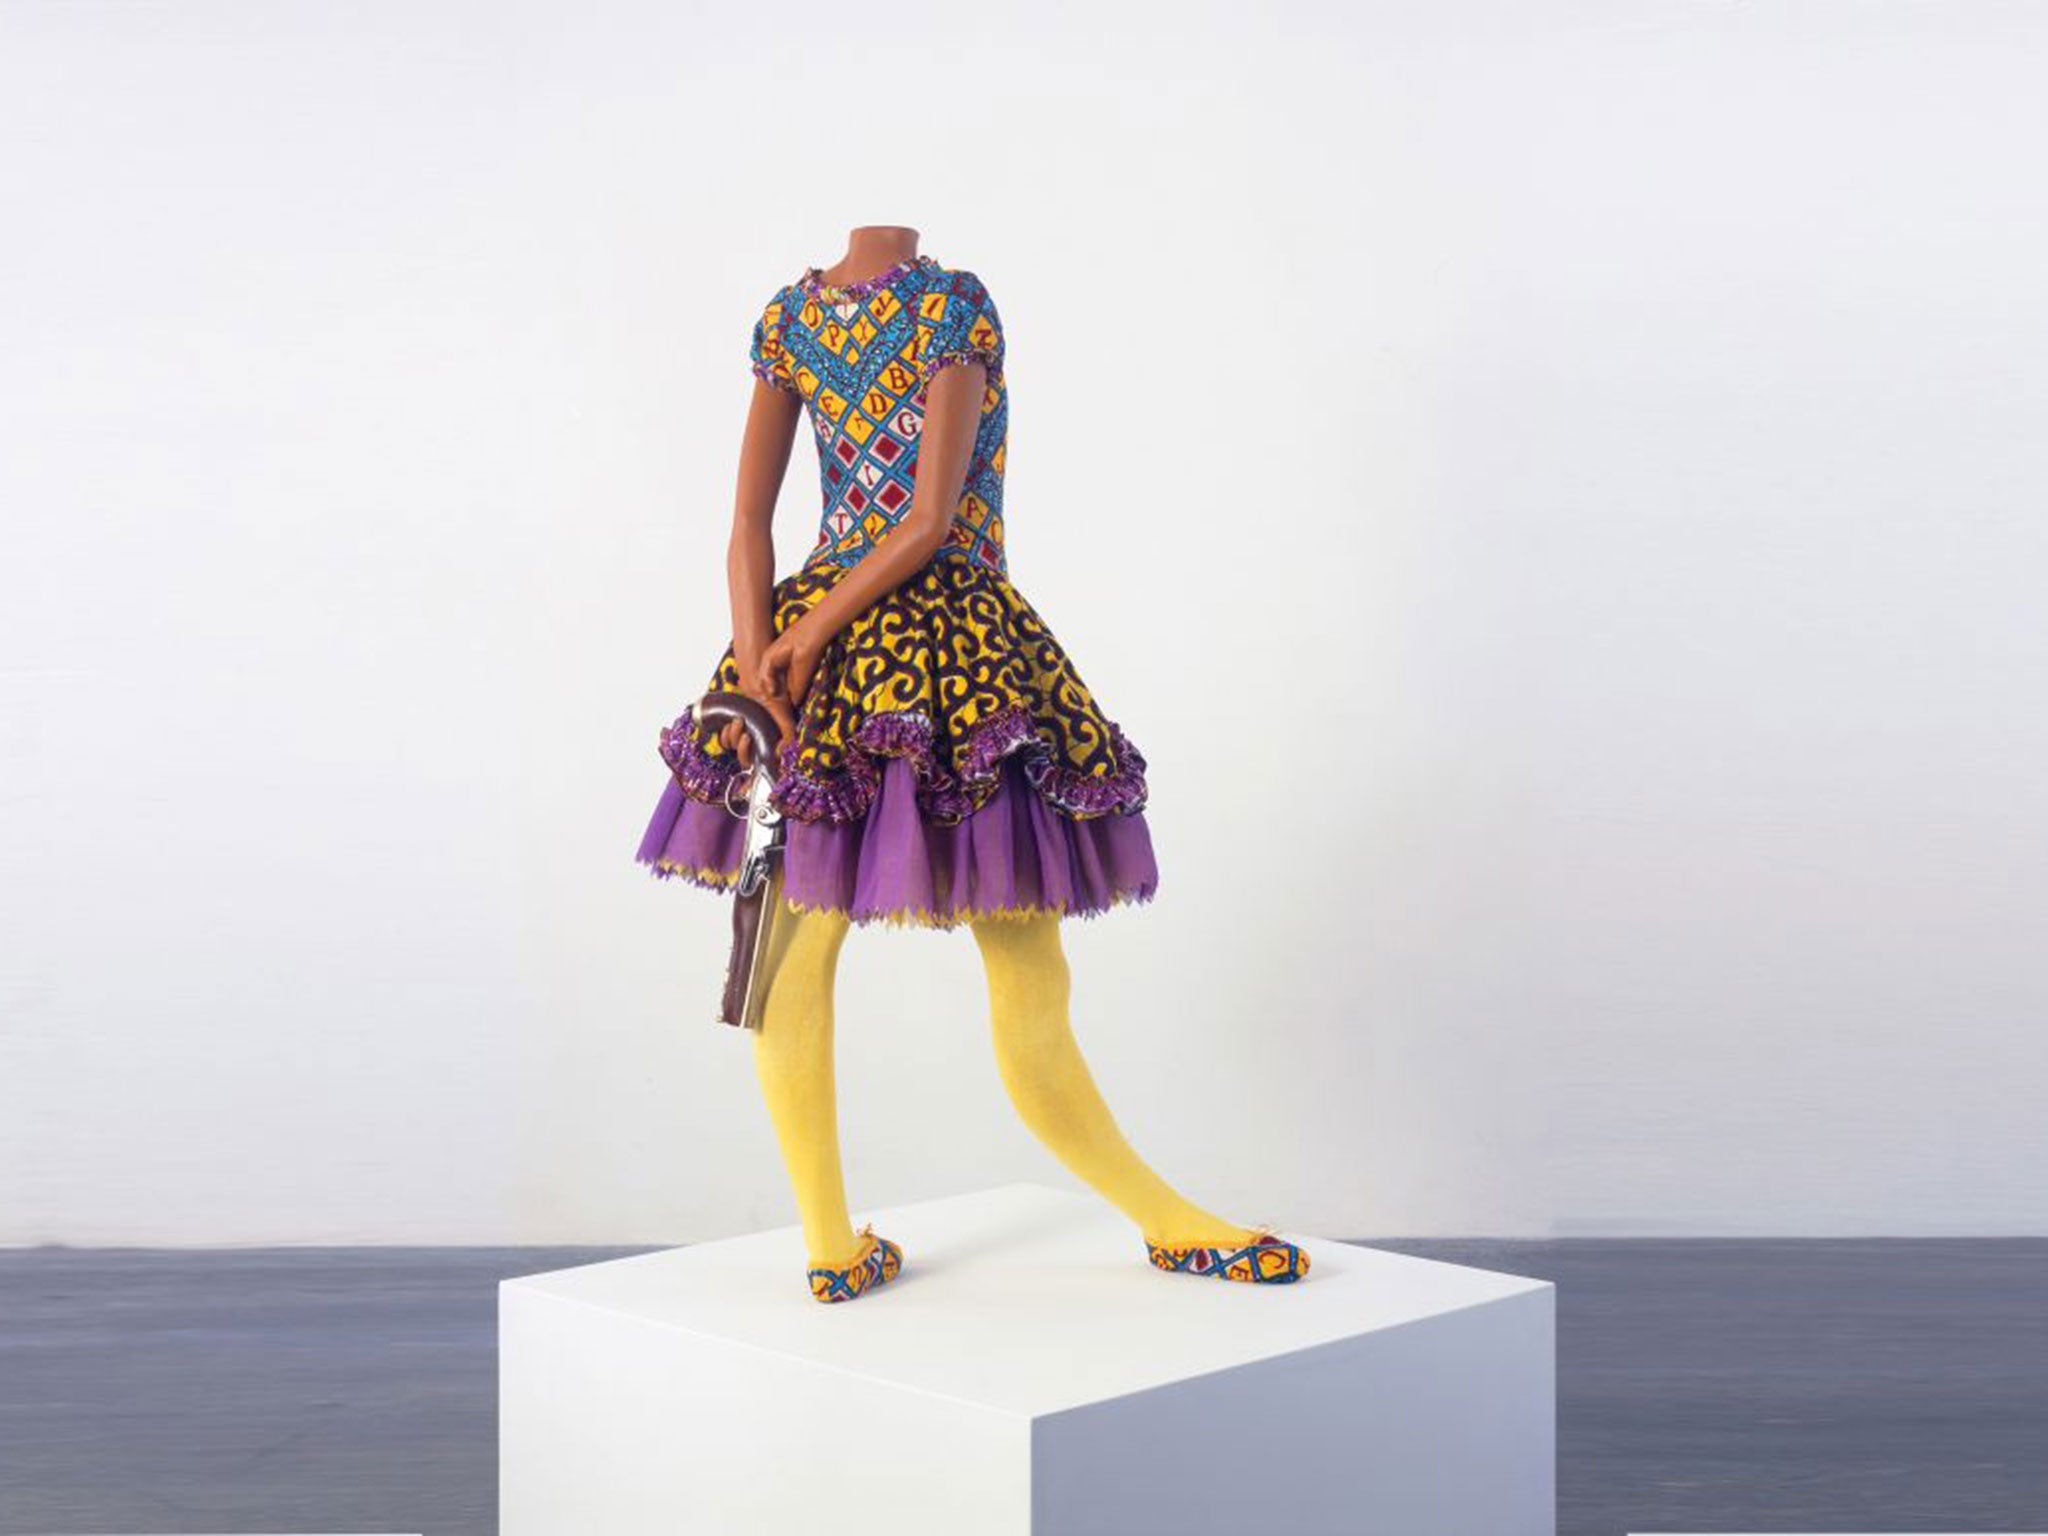 Revolutionary: Yinka Shonibare’s ‘Girl Ballerina’